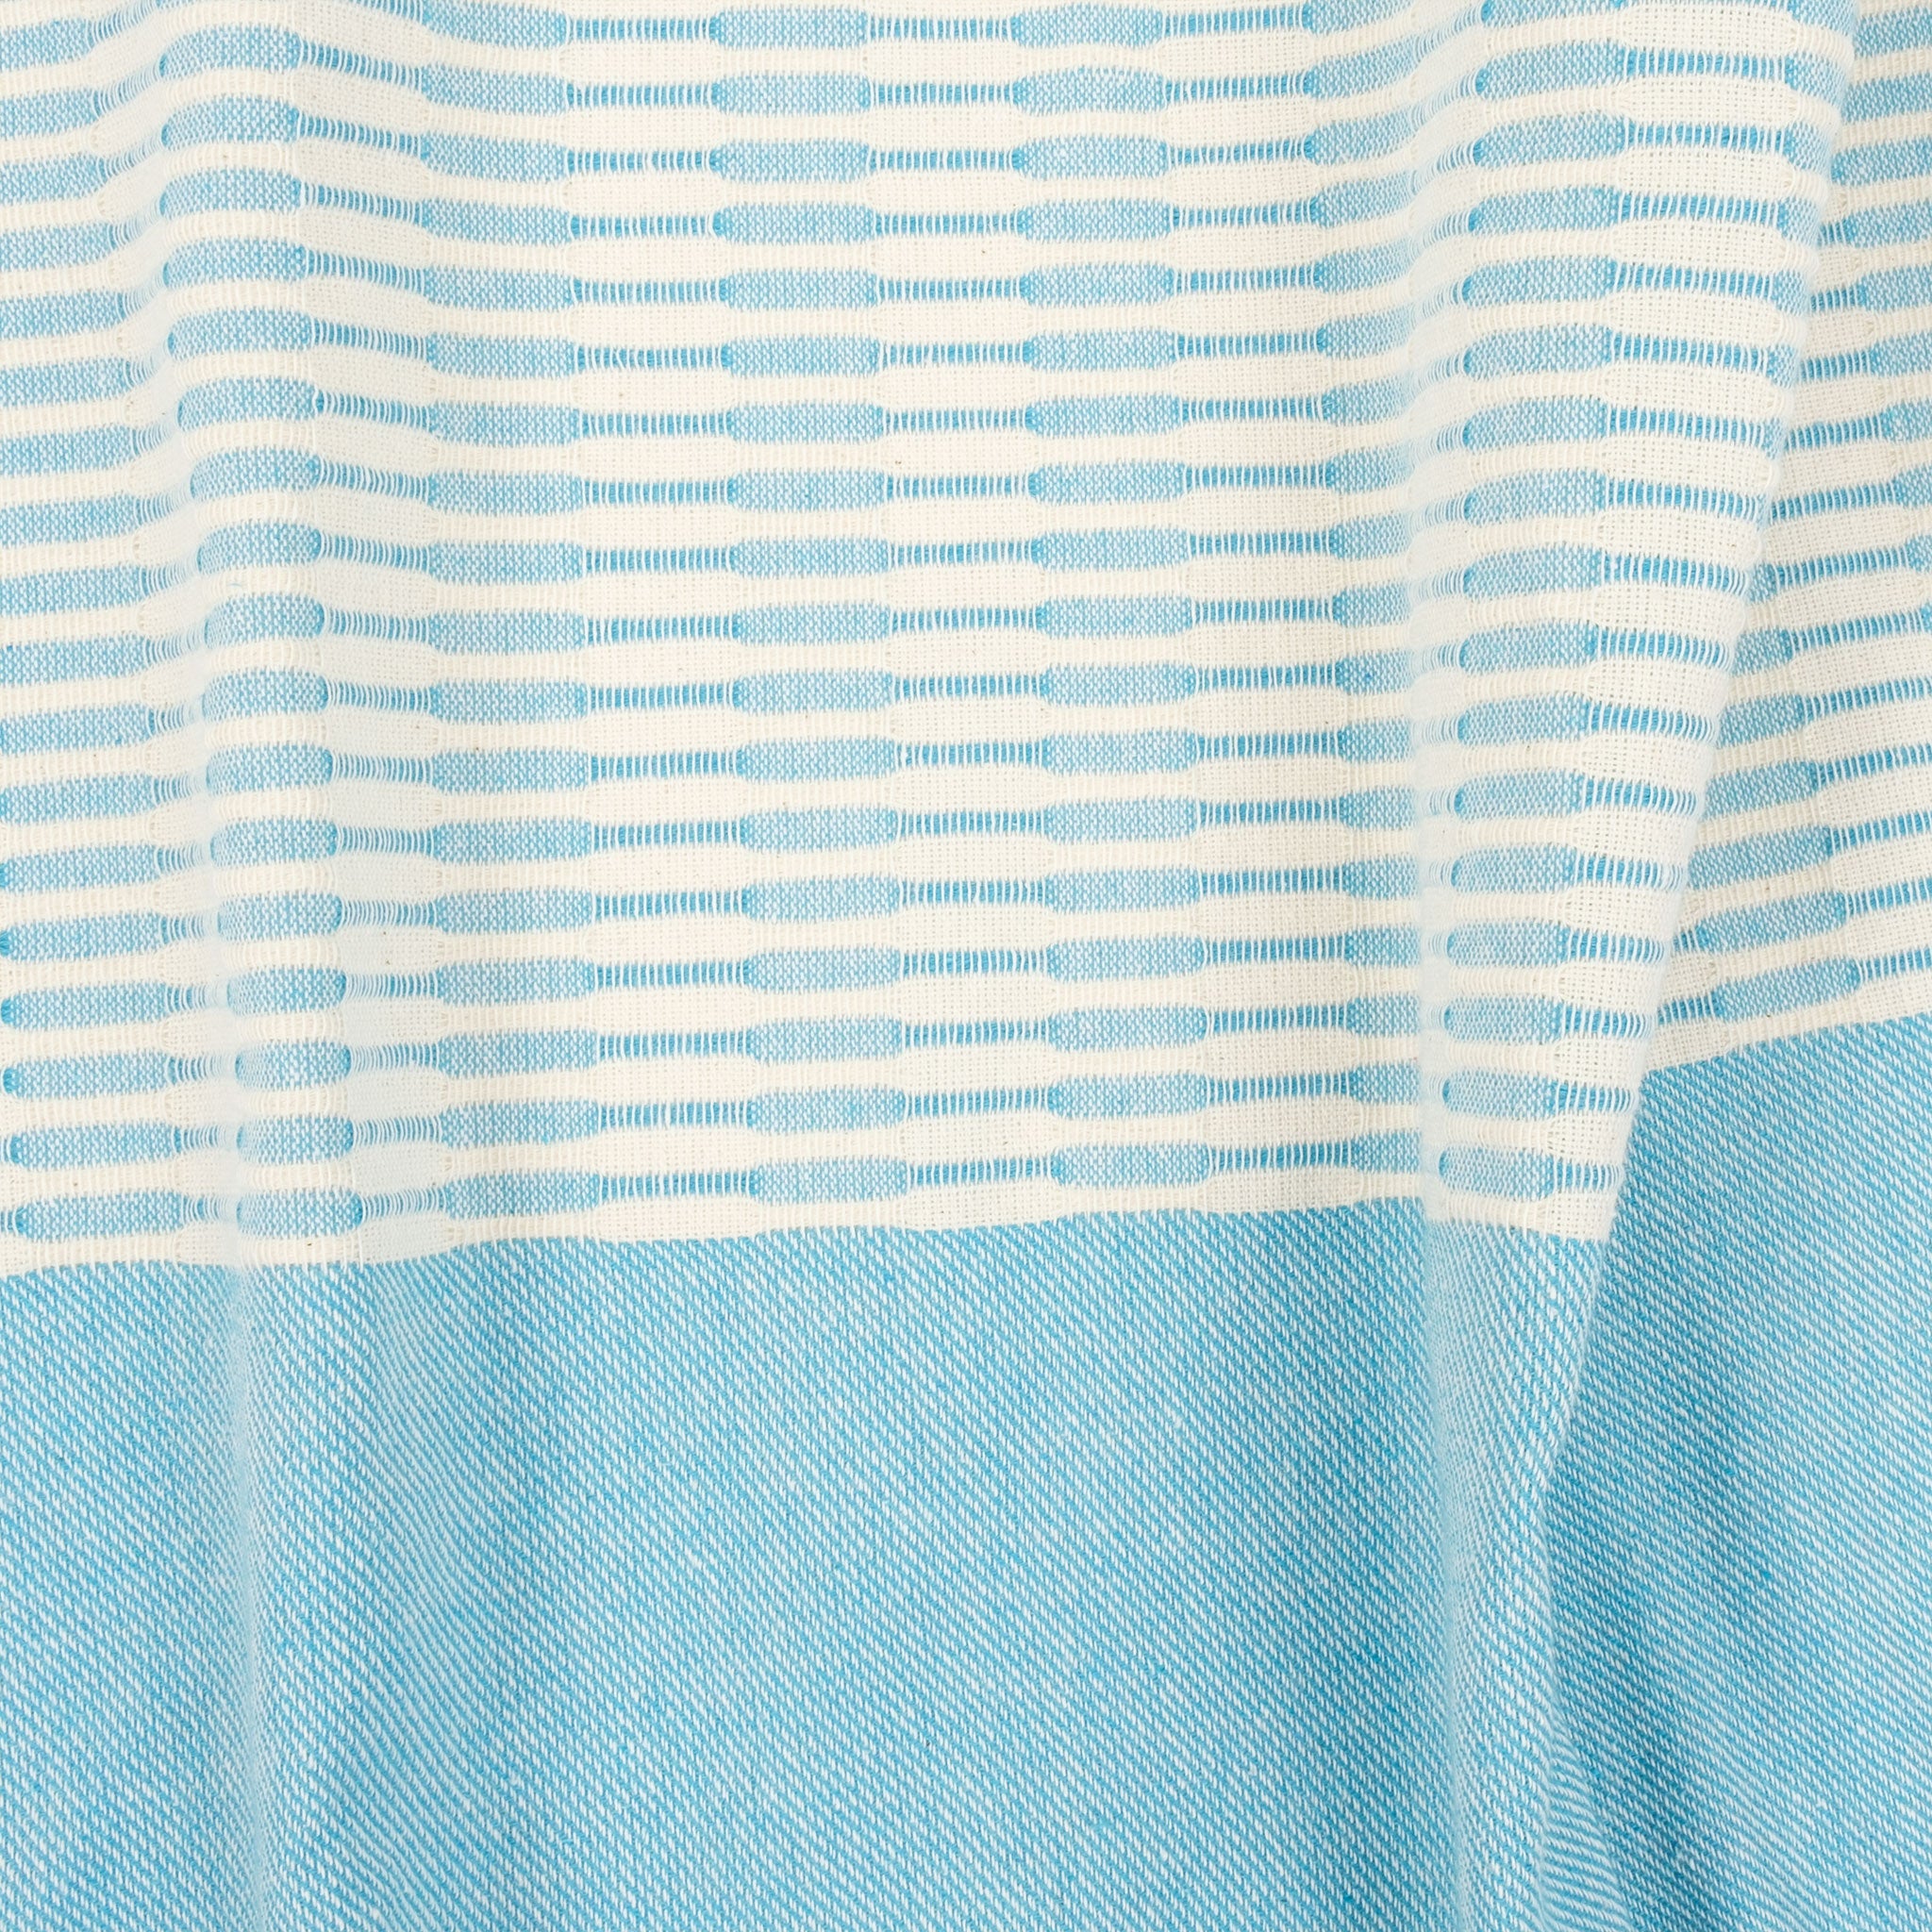 American Soft Linen - 100% Cotton Turkish Peshtemal Towels 40x70 Inches - Turquoise - 2